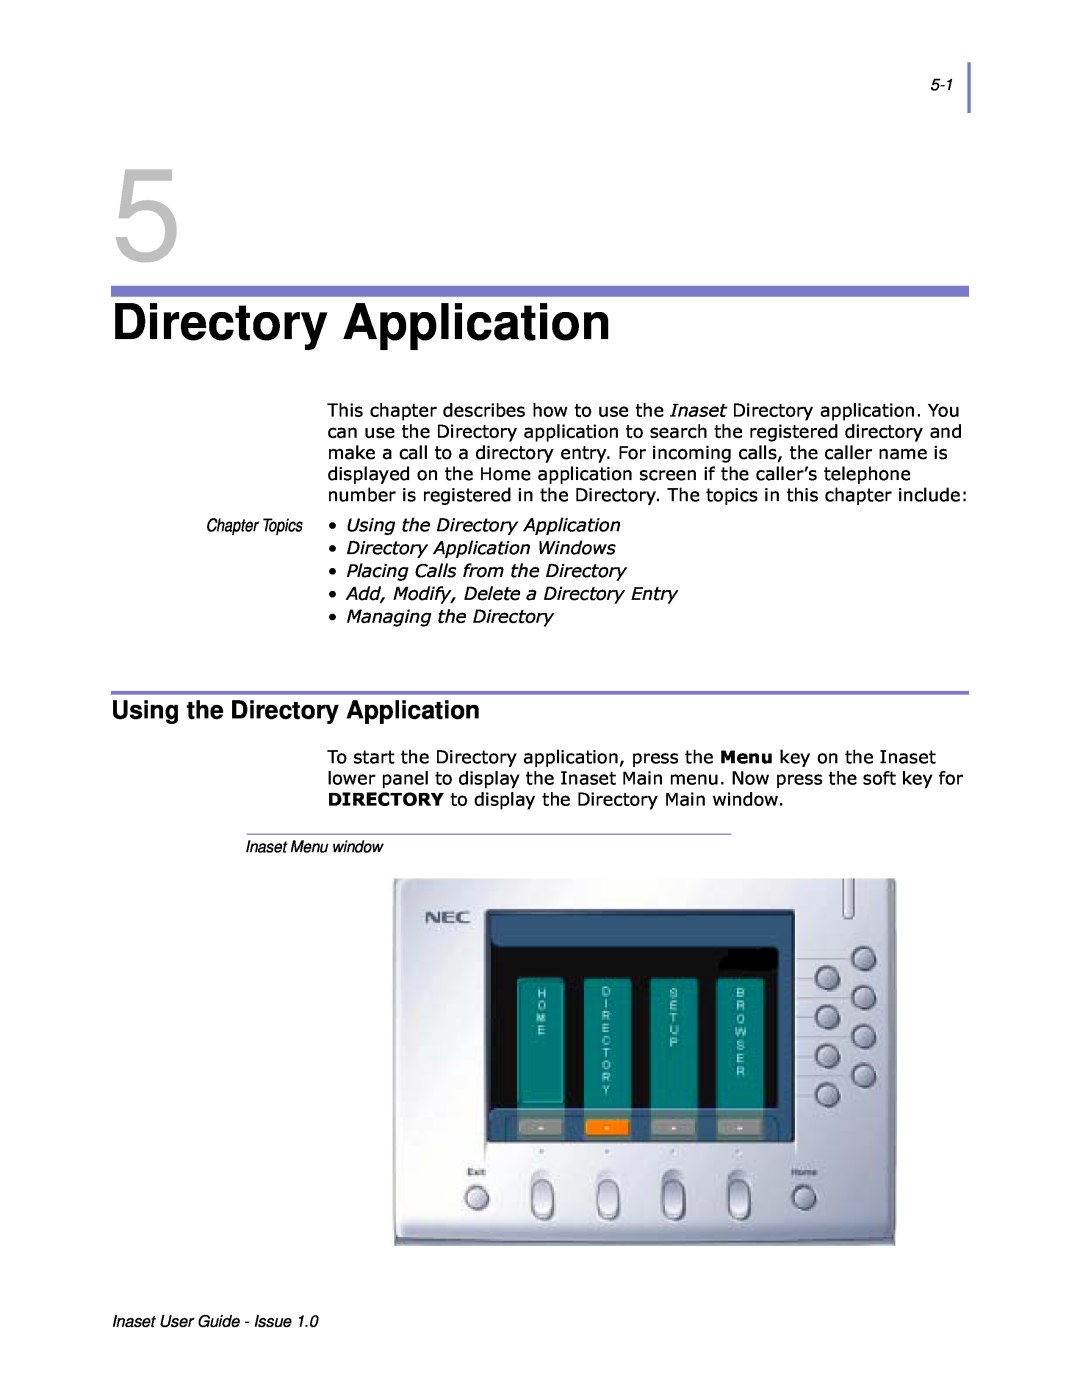 NEC NEAX 2000 IPS Using the Directory Application, Chapter Topics ‡ 8VLQJWKHLUHFWRU\$SSOLFDWLRQ, Inaset Menu window 